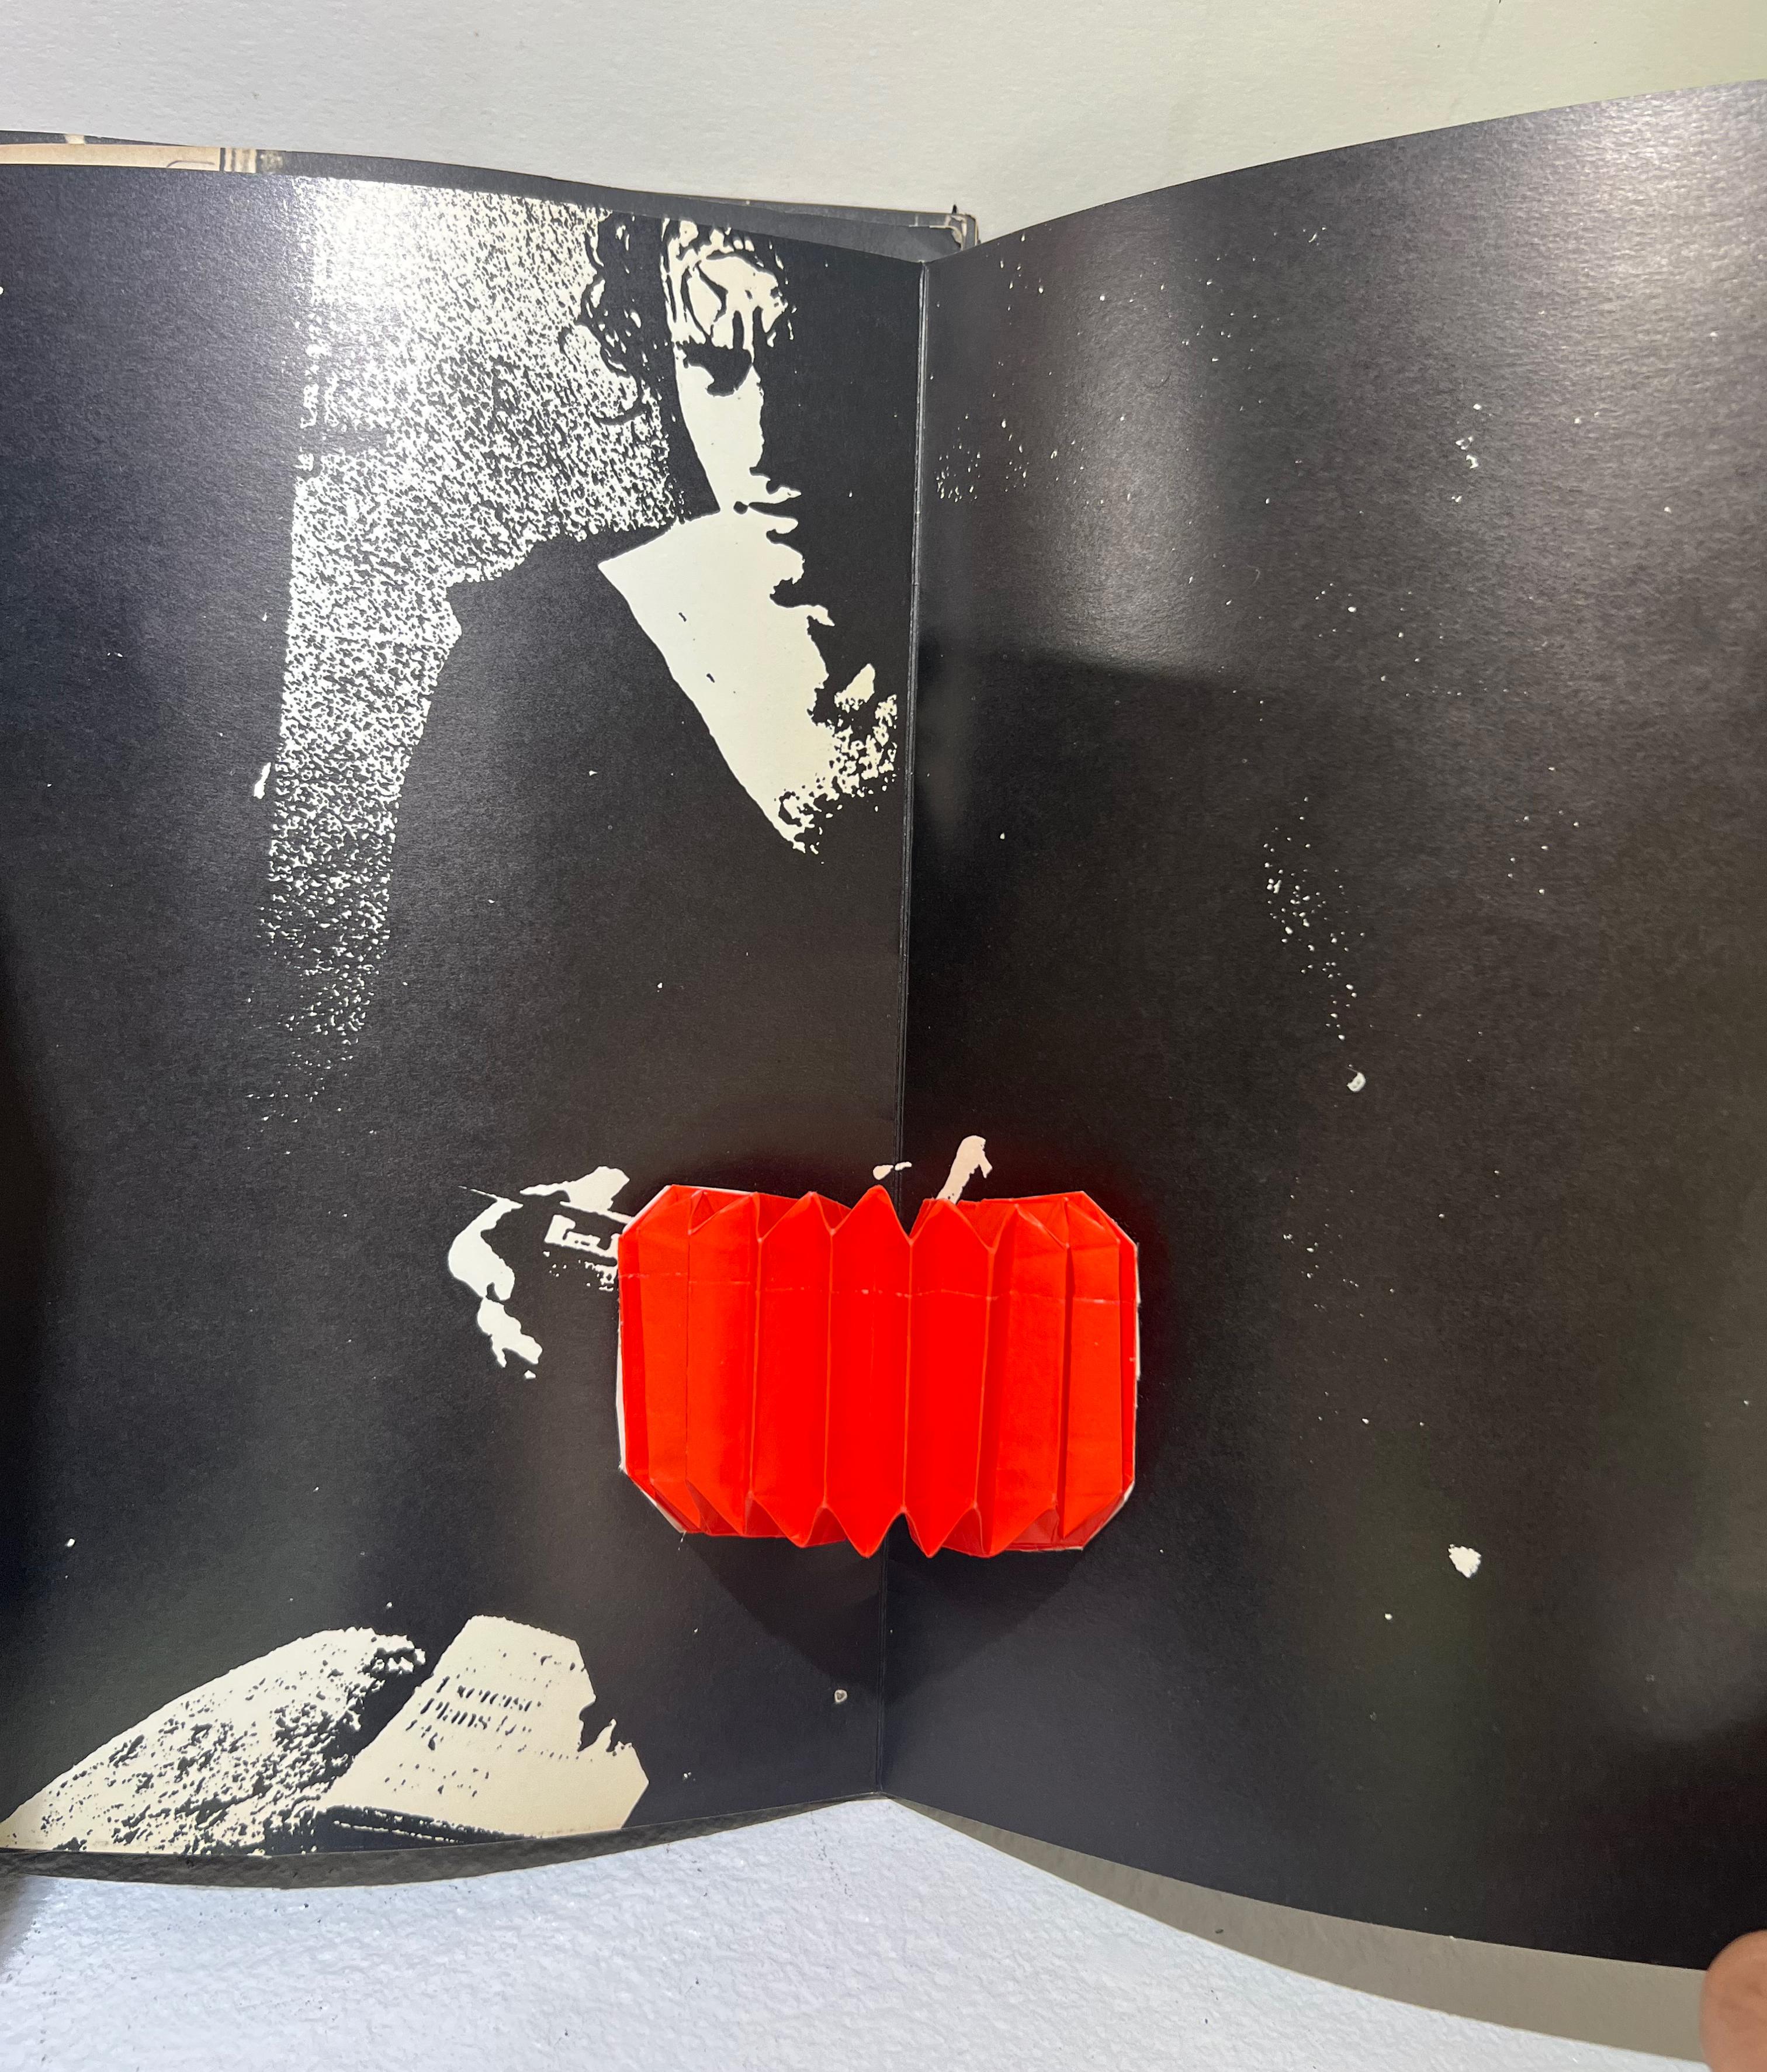 An original hard copy of Andy Warhol's Brillo book.

11.25